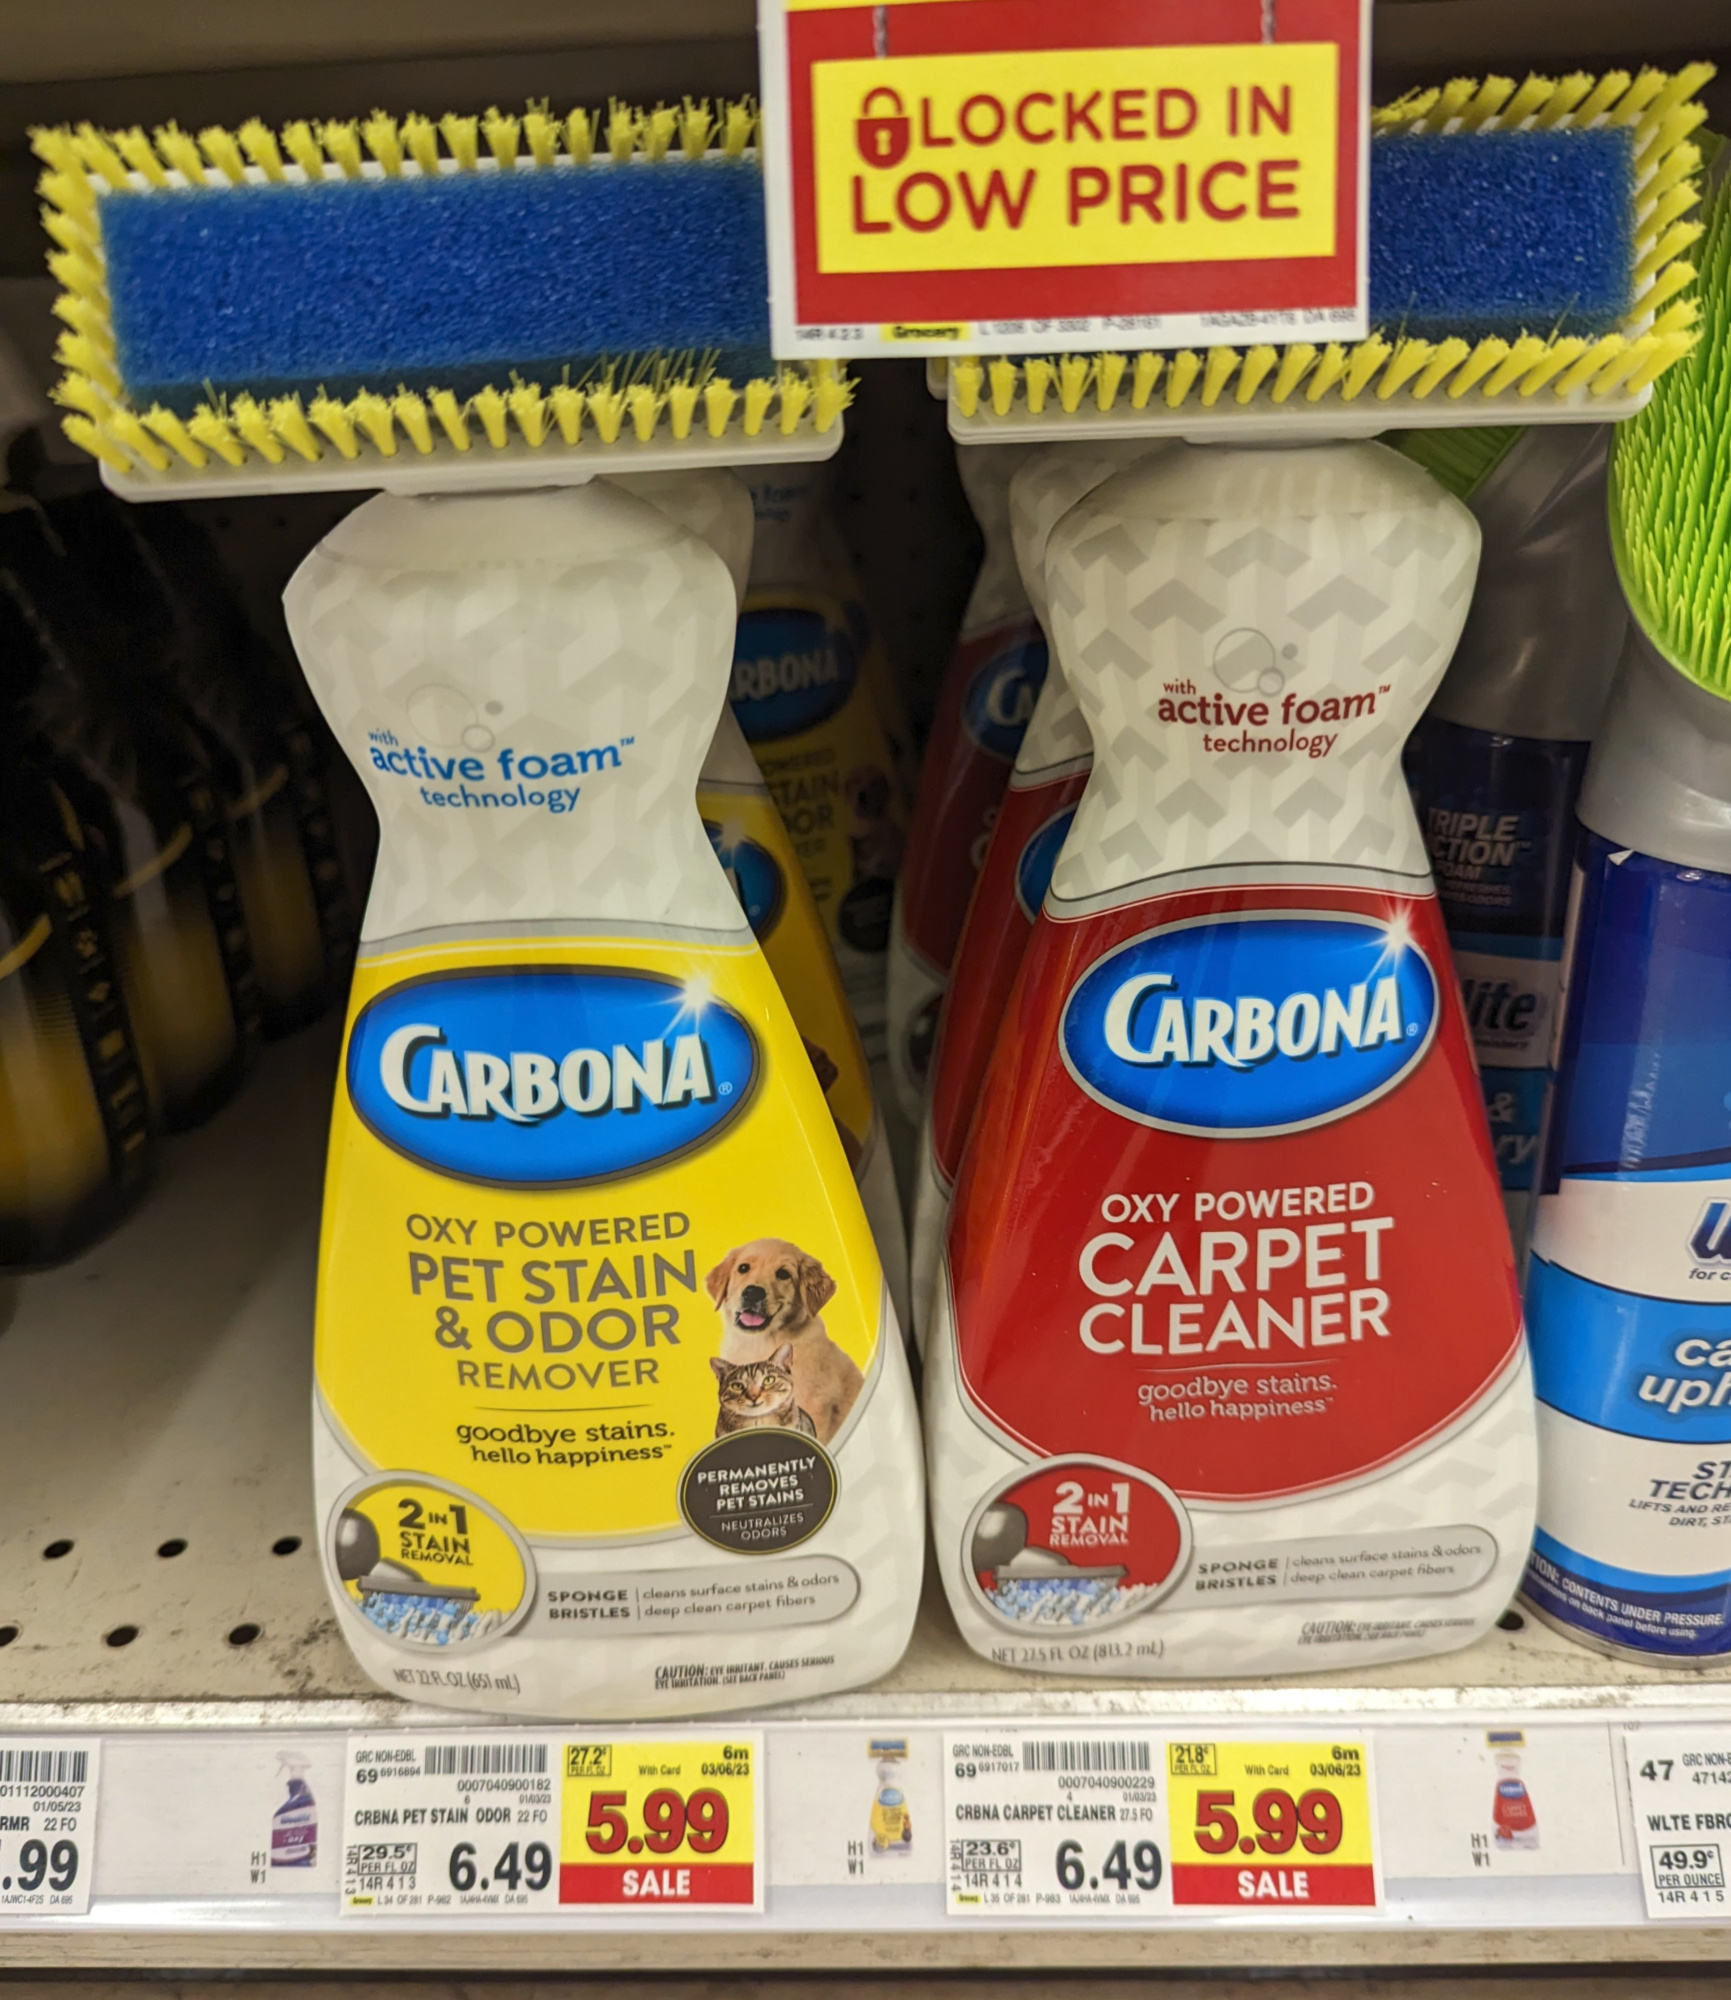 Carbona Carpet Cleaner As Low As $3.49 At Kroger (Regular Price $6.49) -  iHeartKroger